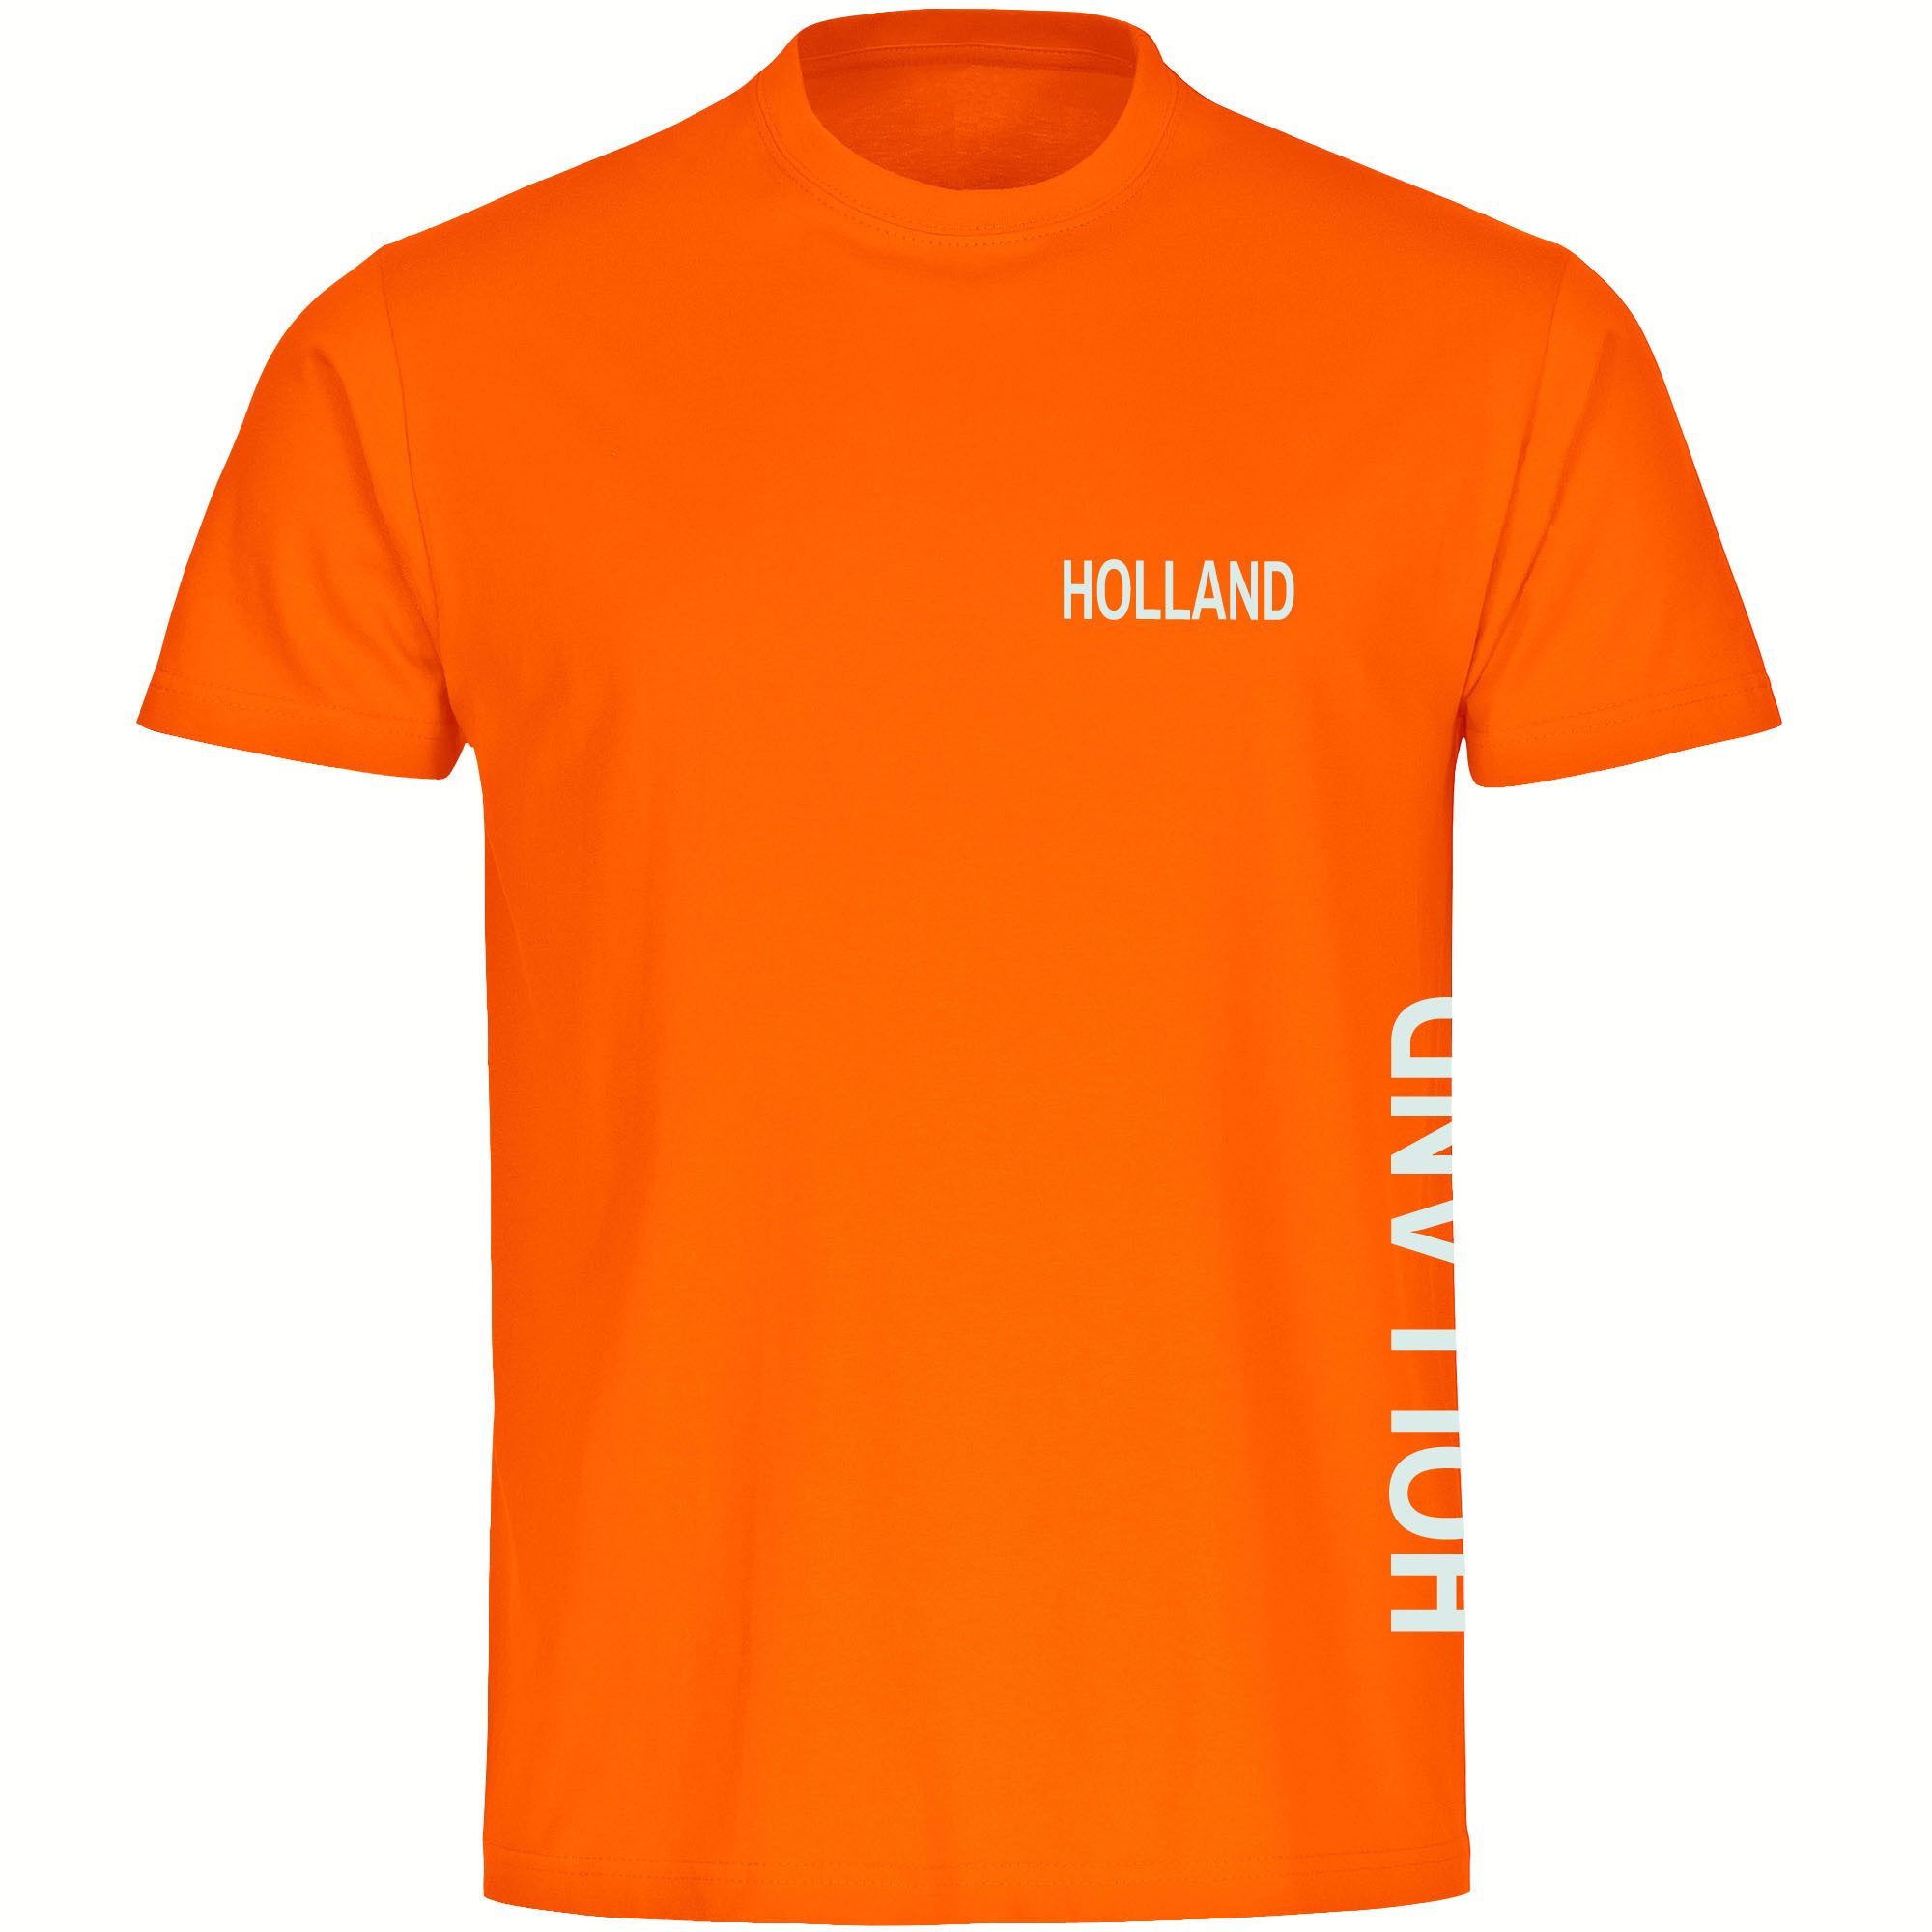 multifanshop T-Shirt Herren Holland - Brust & Seite - Männer